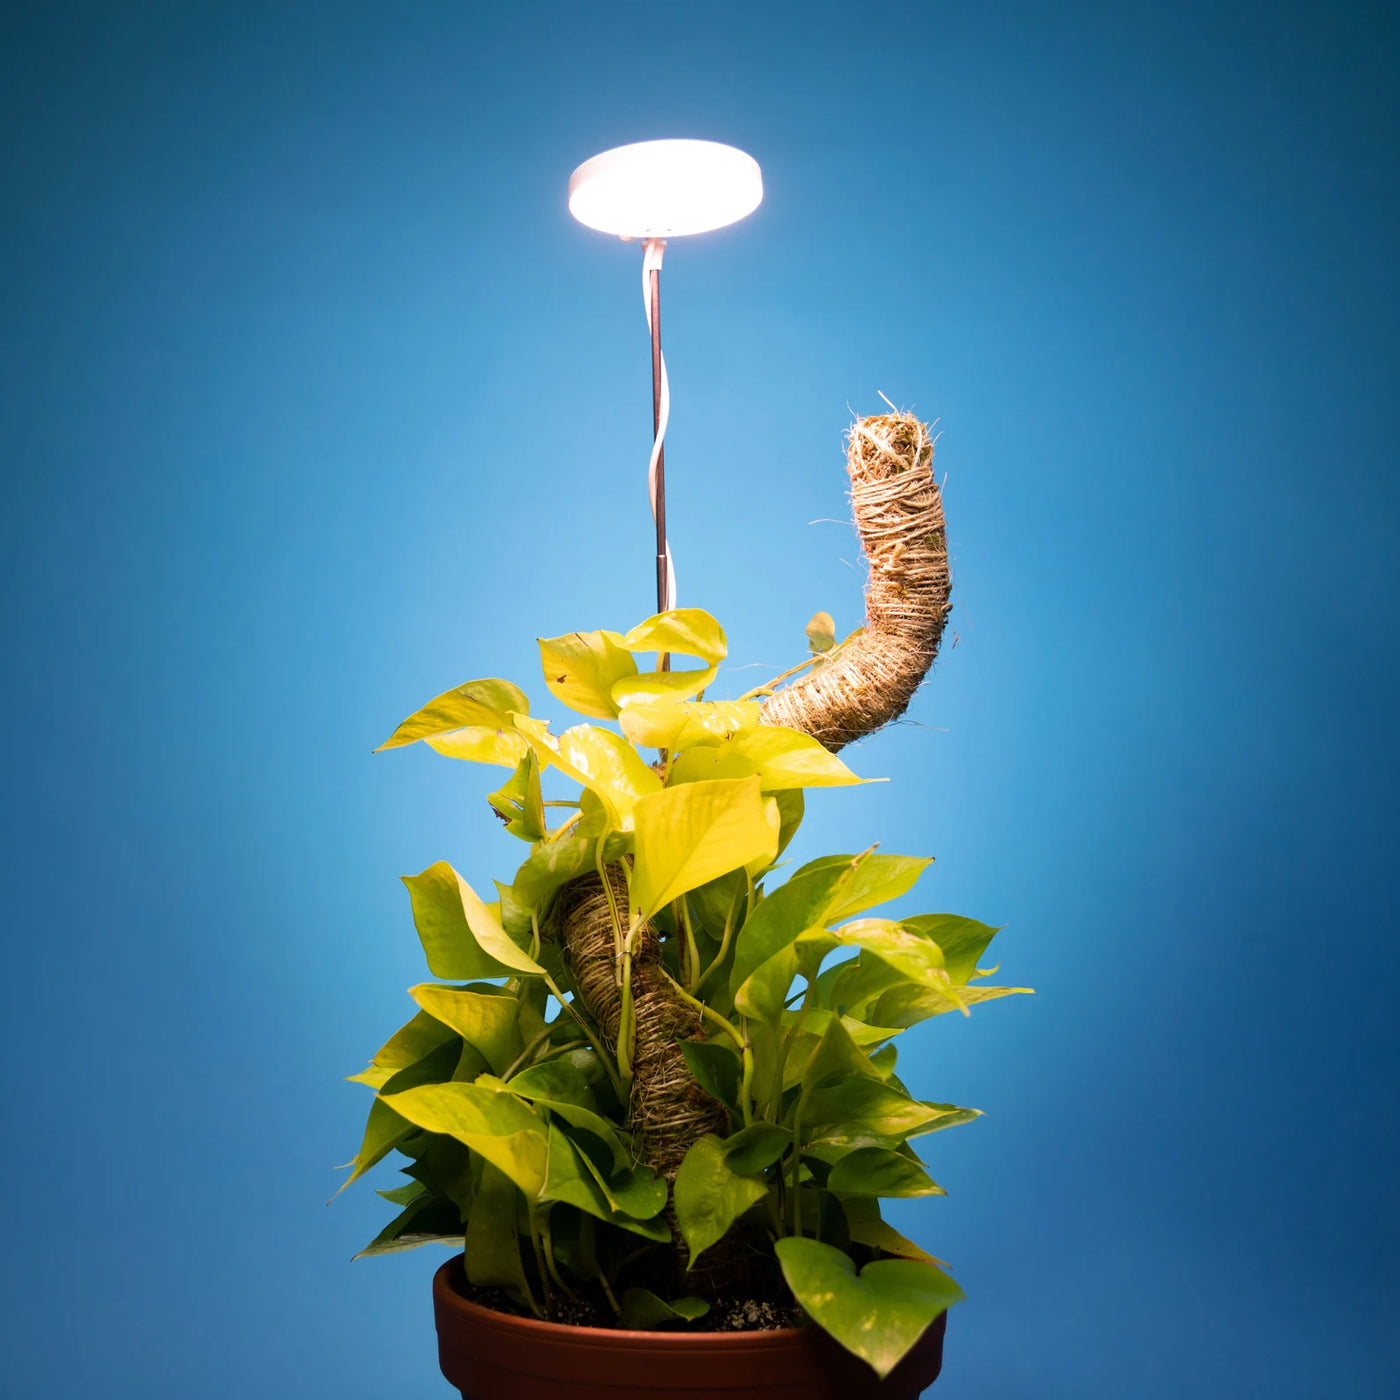 Adjustable LED Plant Grow Light for sale near me